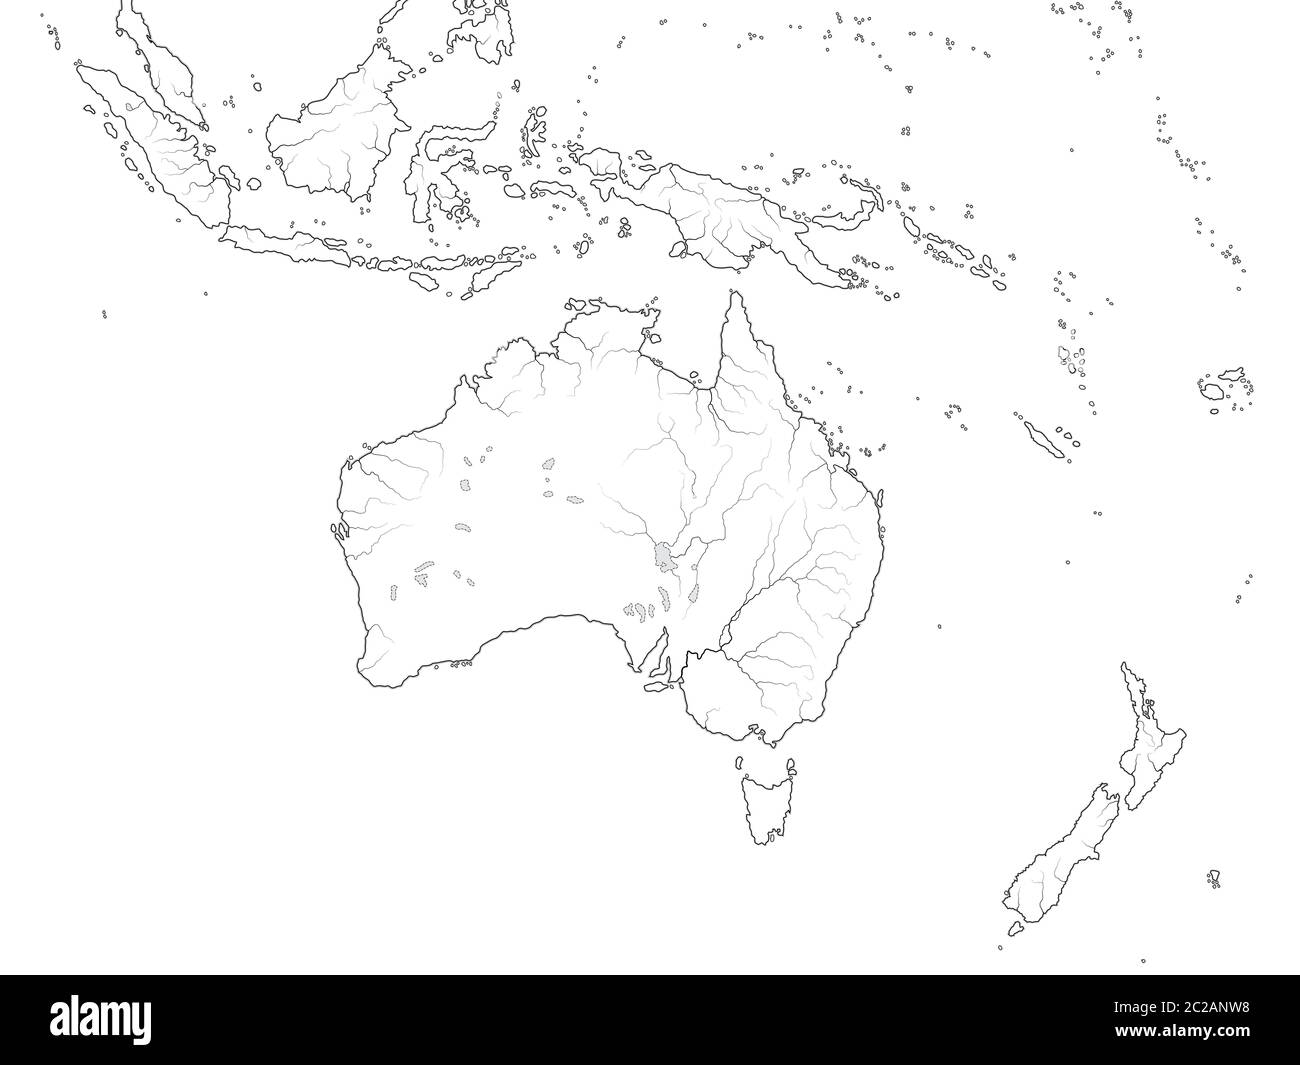 World Map of AUSTRALASIA REGION: Australia, Oceania, Indonesia, Polynesia, Pacific Ocean. Geographic chart. Stock Photo